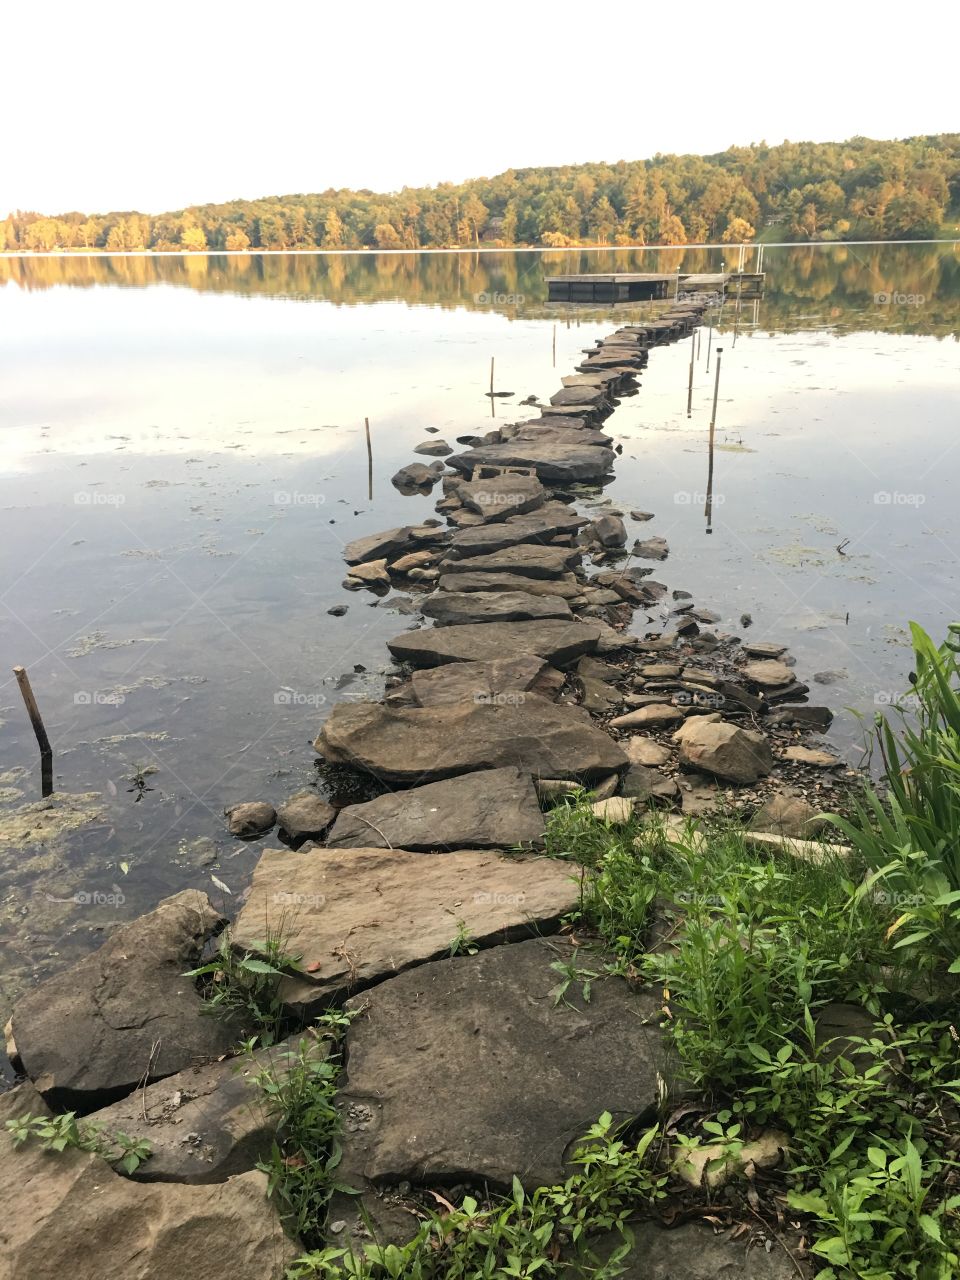 The lake path